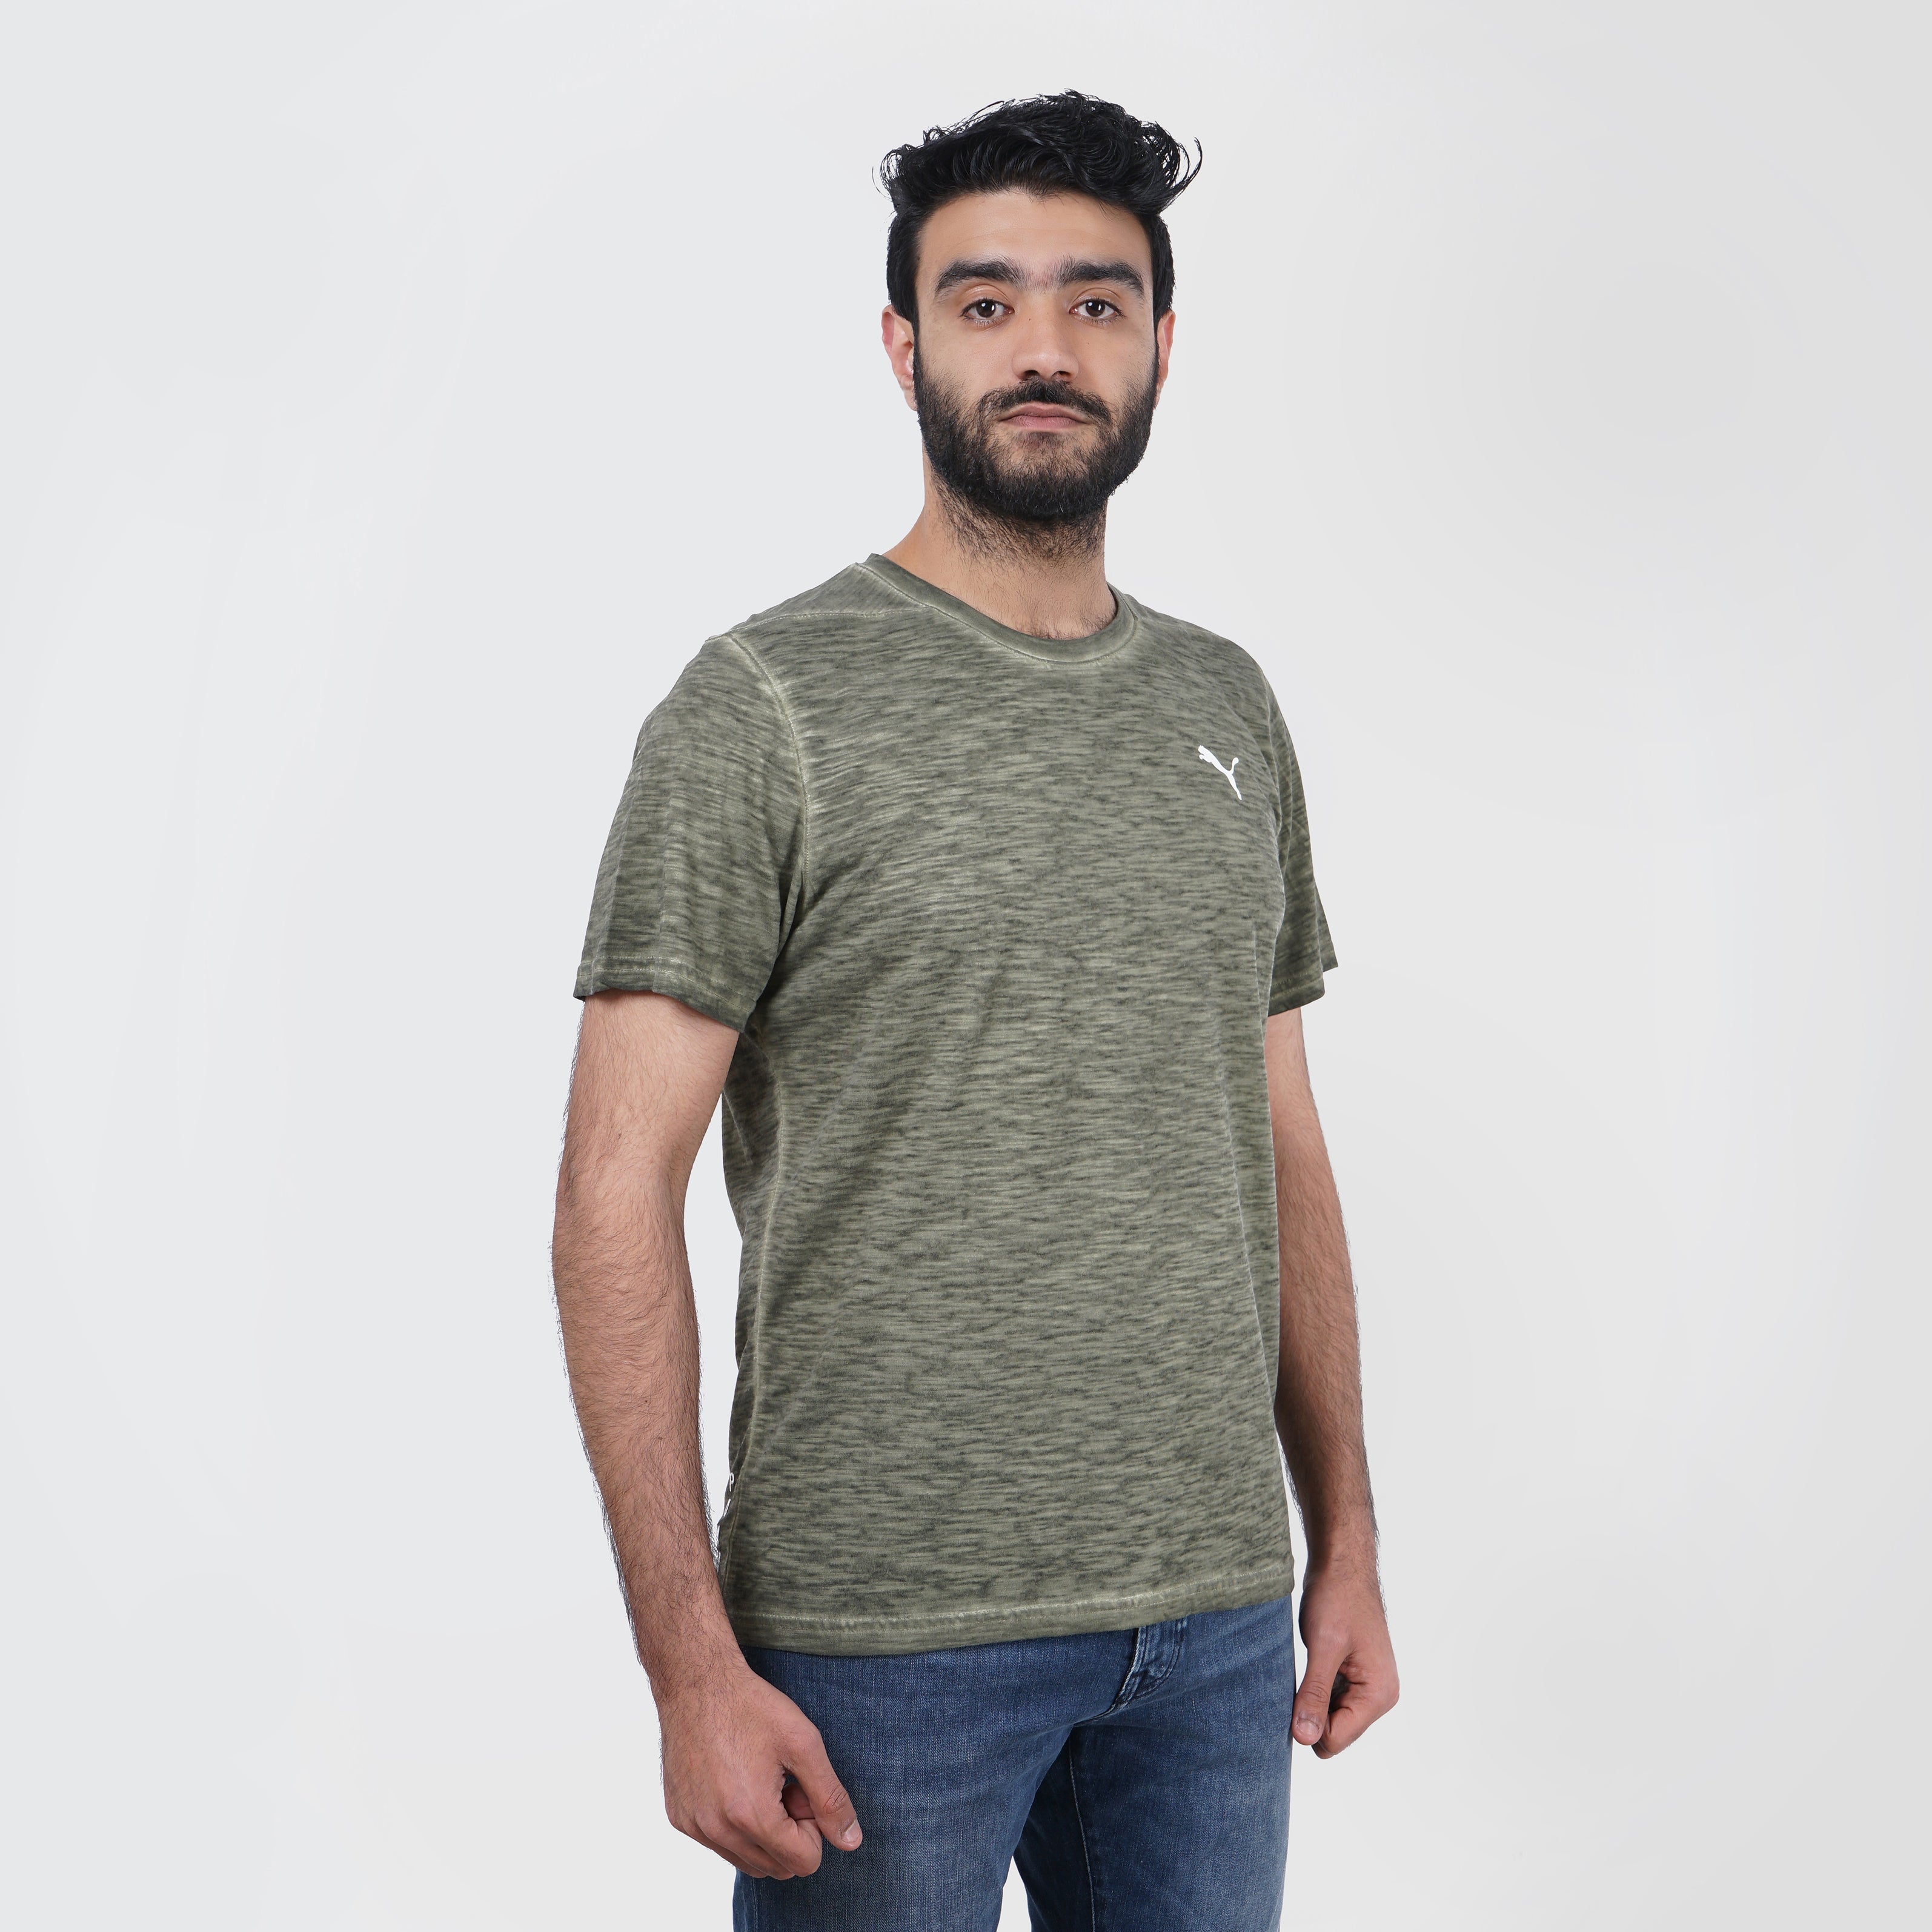 Puma Short Sleeves Printed Olive T-Shirt - Marca Deals - puma